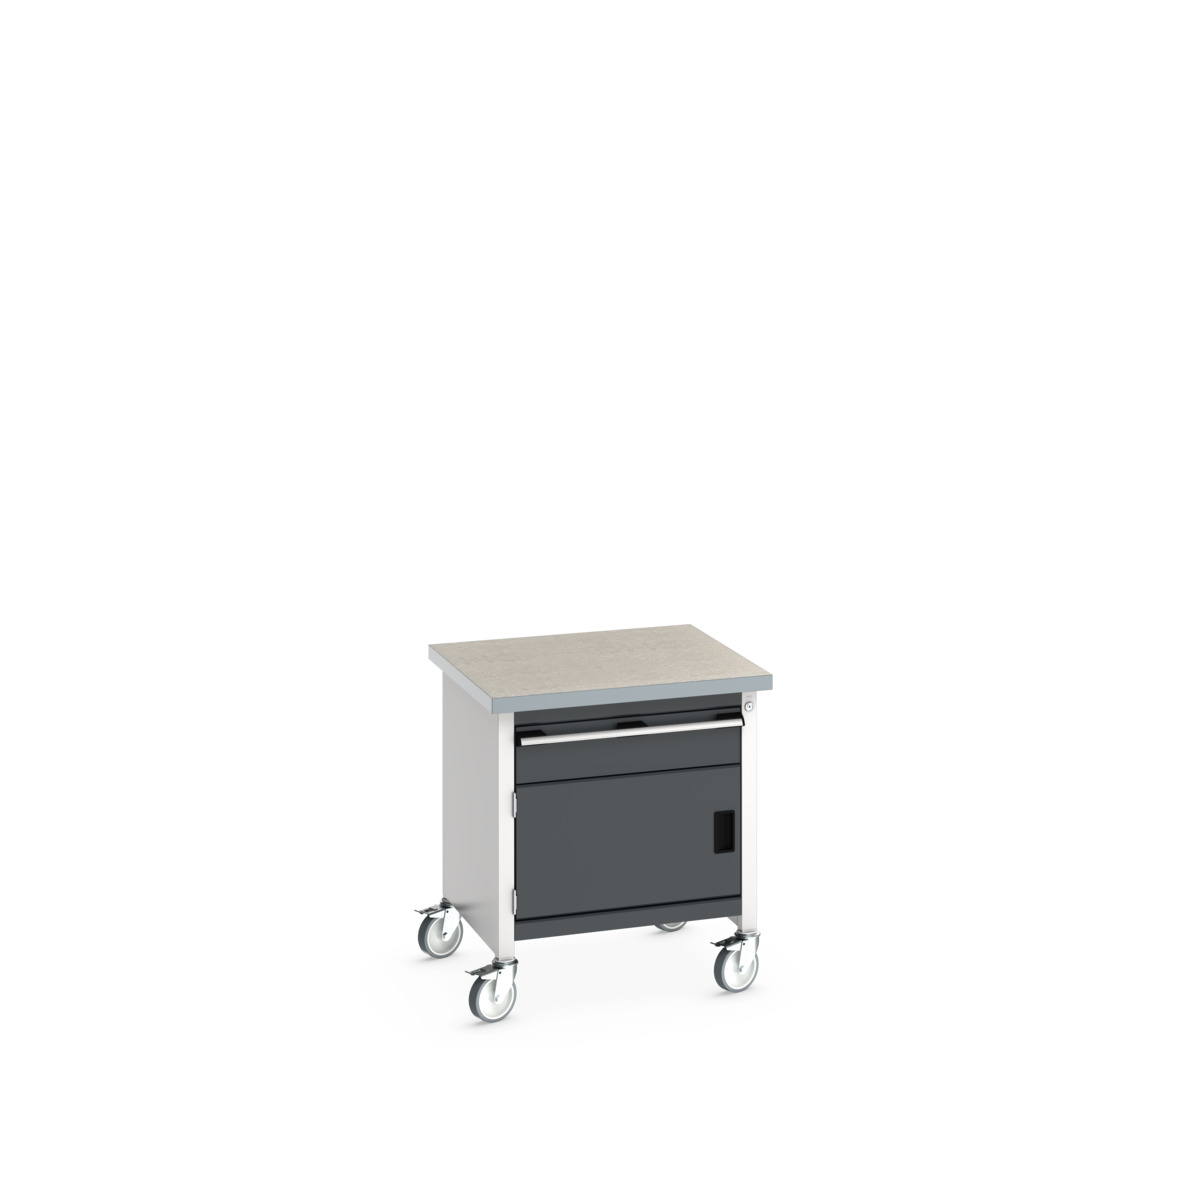 41002090.19V - cubio mobile storage bench (lino)